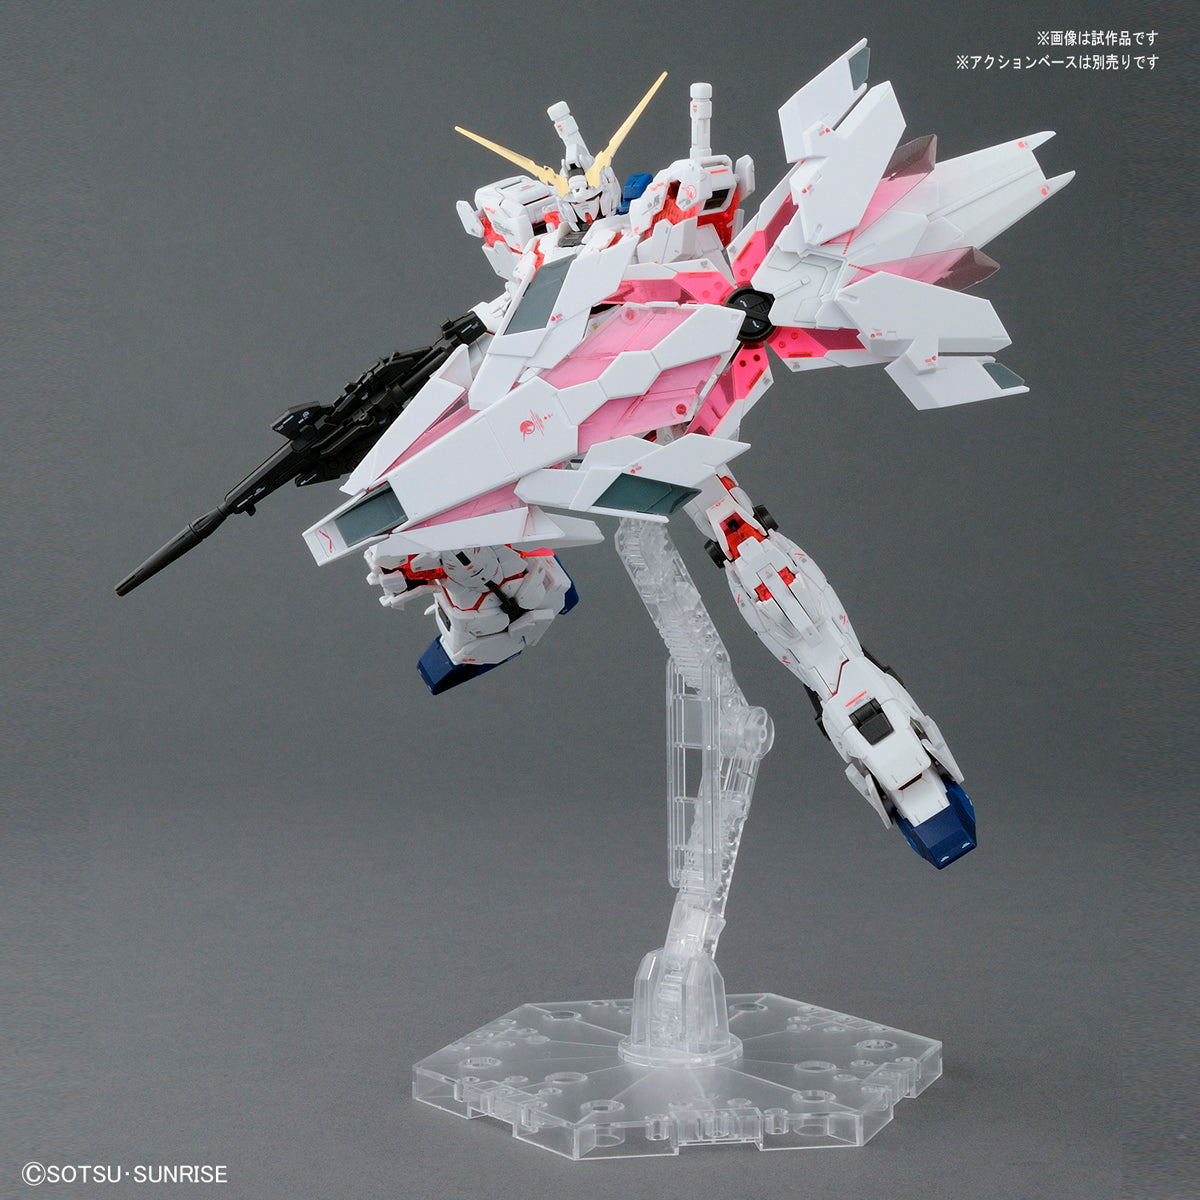 RG Unicorn Gundam (Bande Dessinee Ver.)